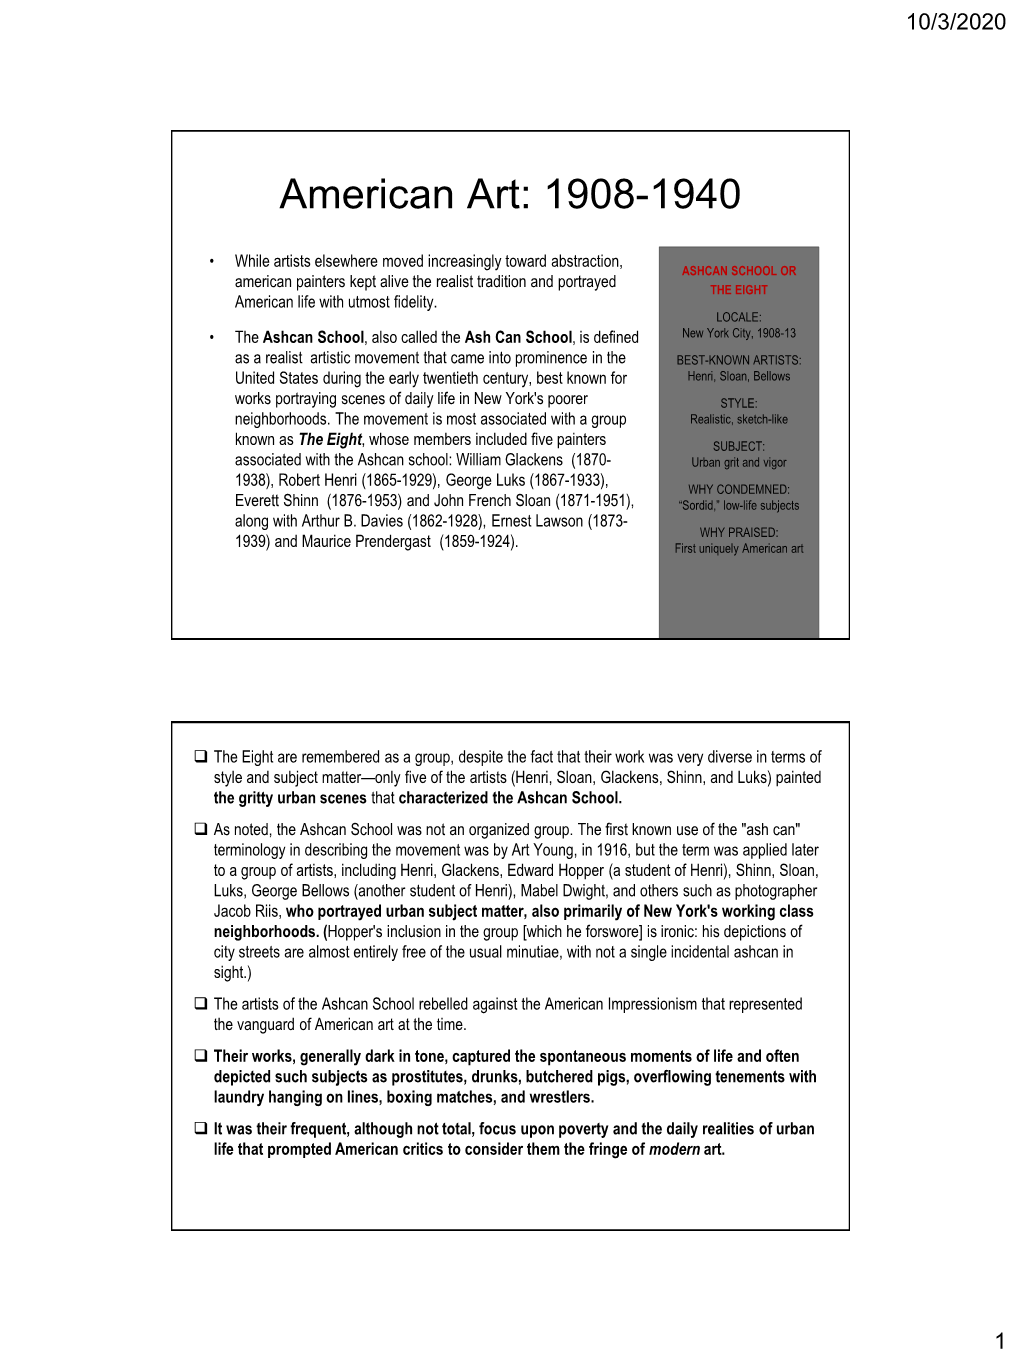 American Art: 1908-1940